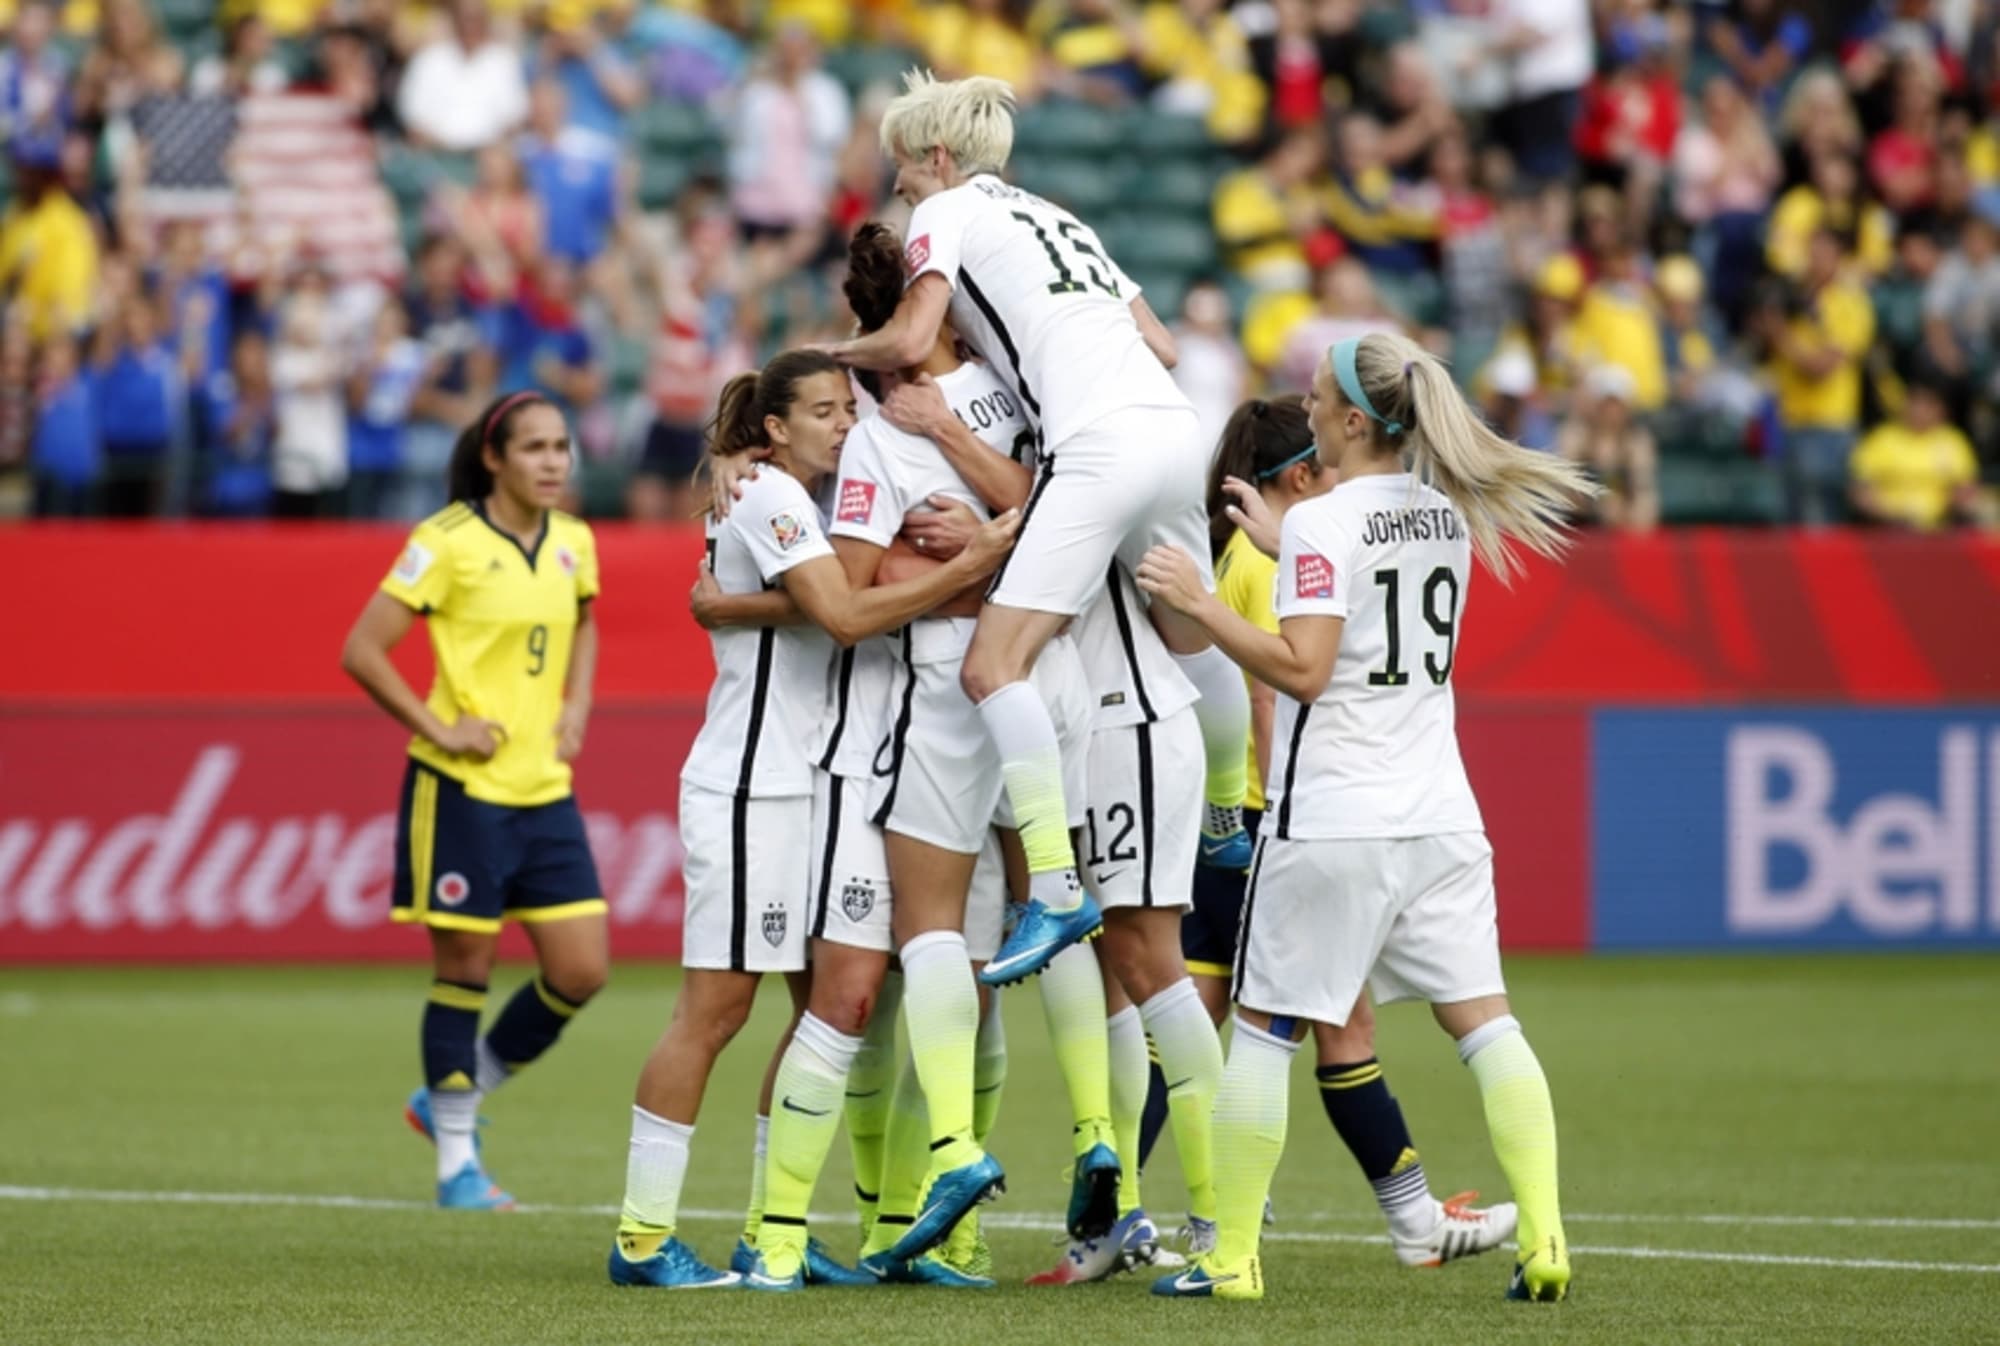 USA vs Colombia final score 20 Full highlights, recap